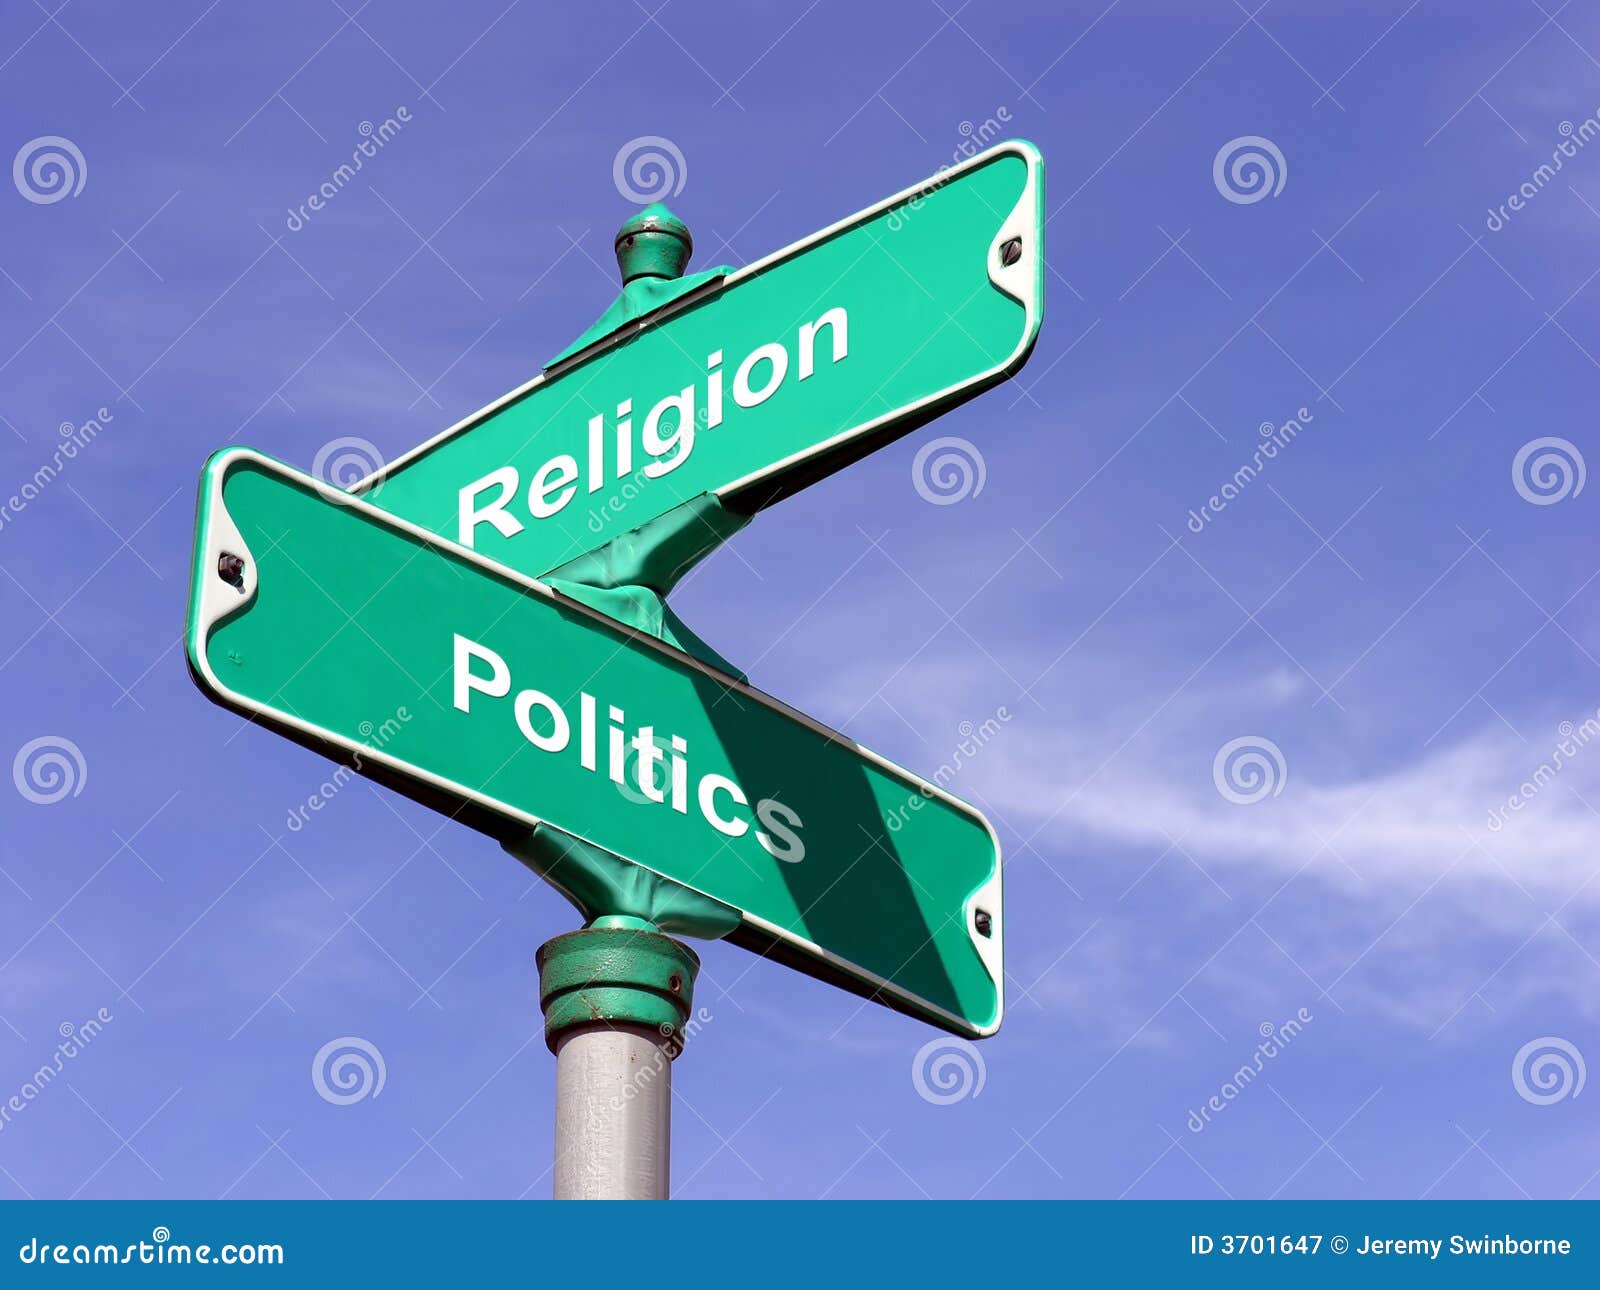 religion vs politics